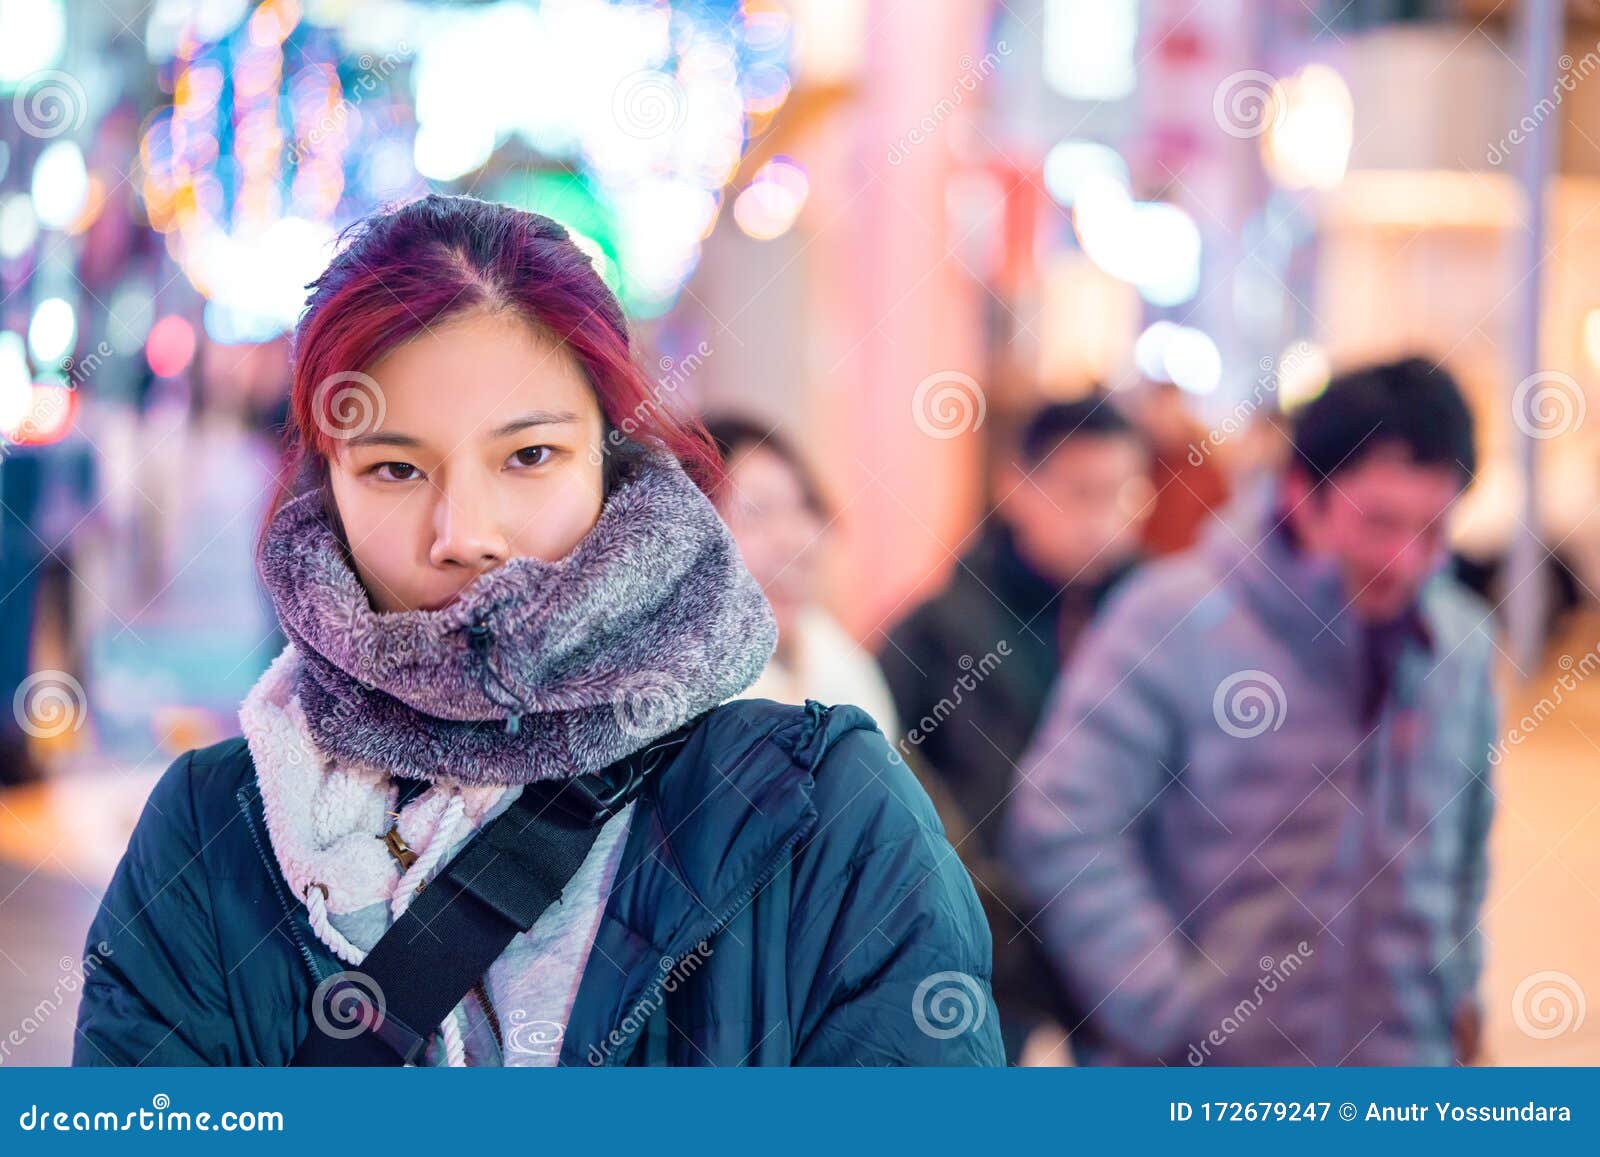 https://thumbs.dreamstime.com/z/portrait-red-hair-asian-woman-walking-busy-street-sendai-japan-beauty-winter-fashion-concept-portrait-red-172679247.jpg